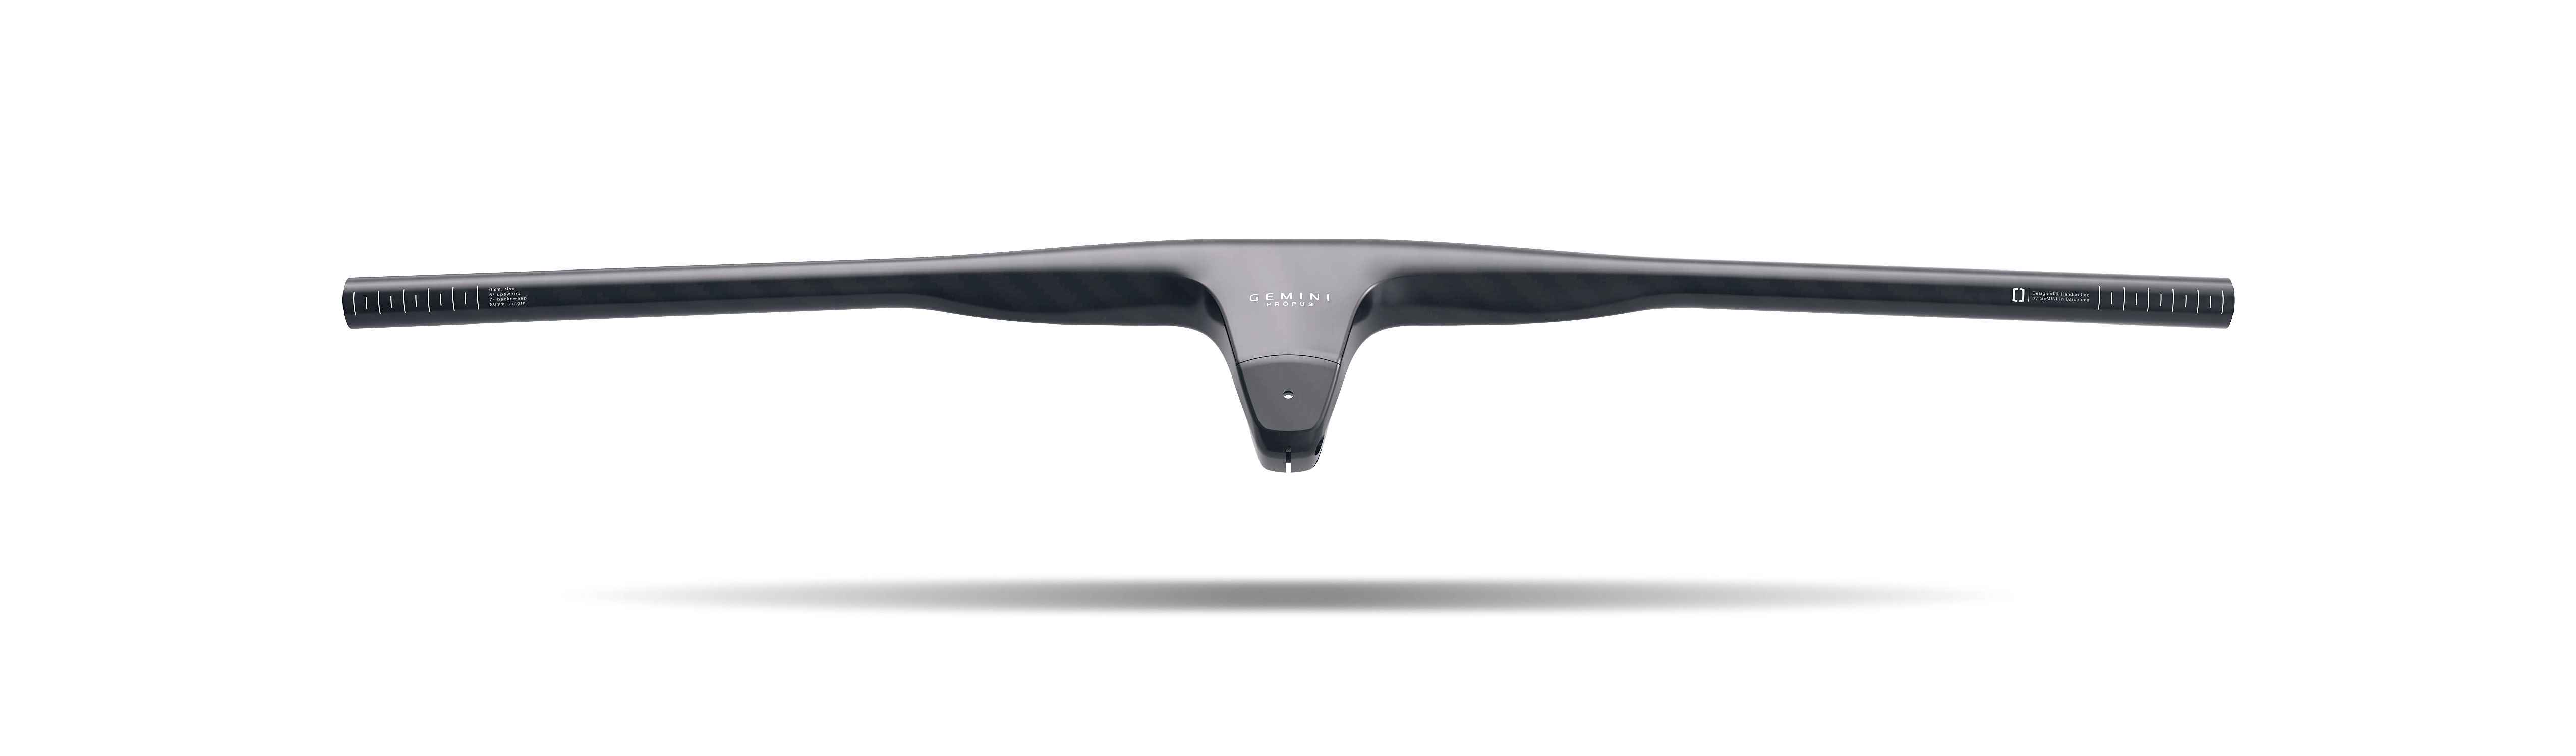 Gemini debuts first full integrated DH handlebar + bar/stem combo for Enduro & XC